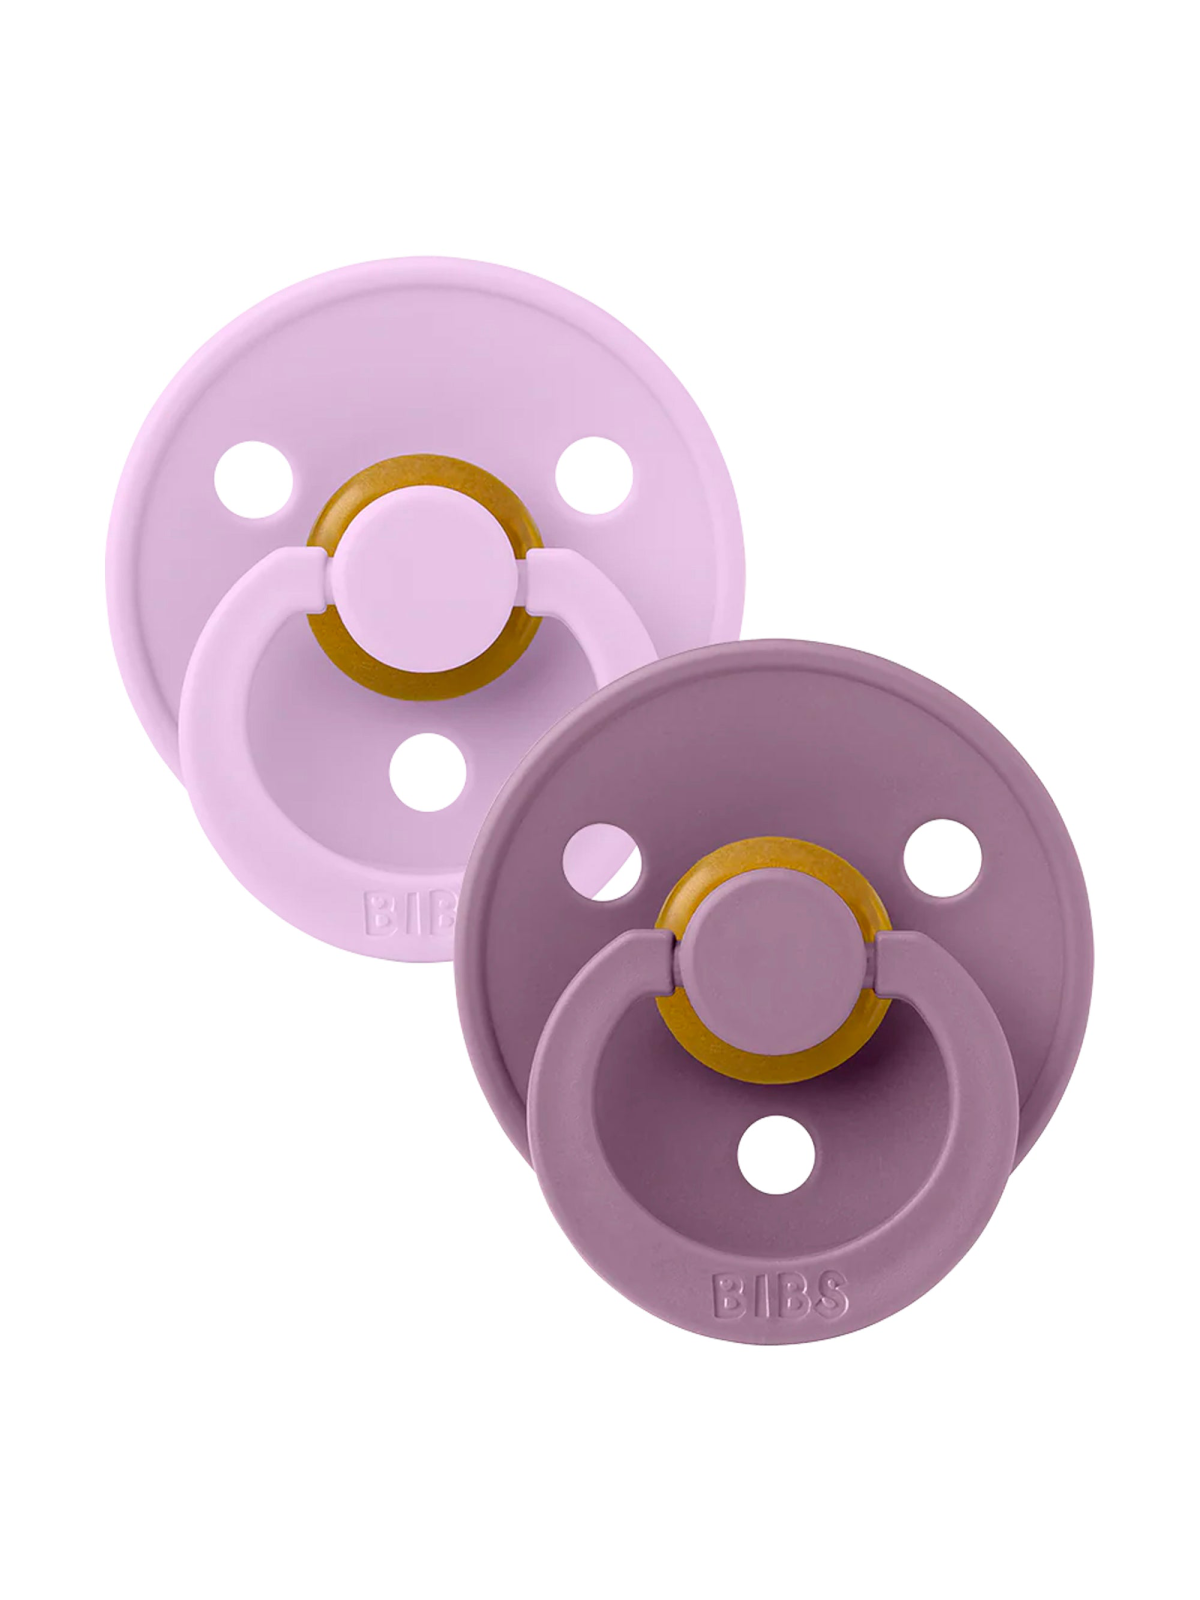 Colour Round Natural Rubber Latex Pacifier 2 Pack, Violet Sky/Mauve